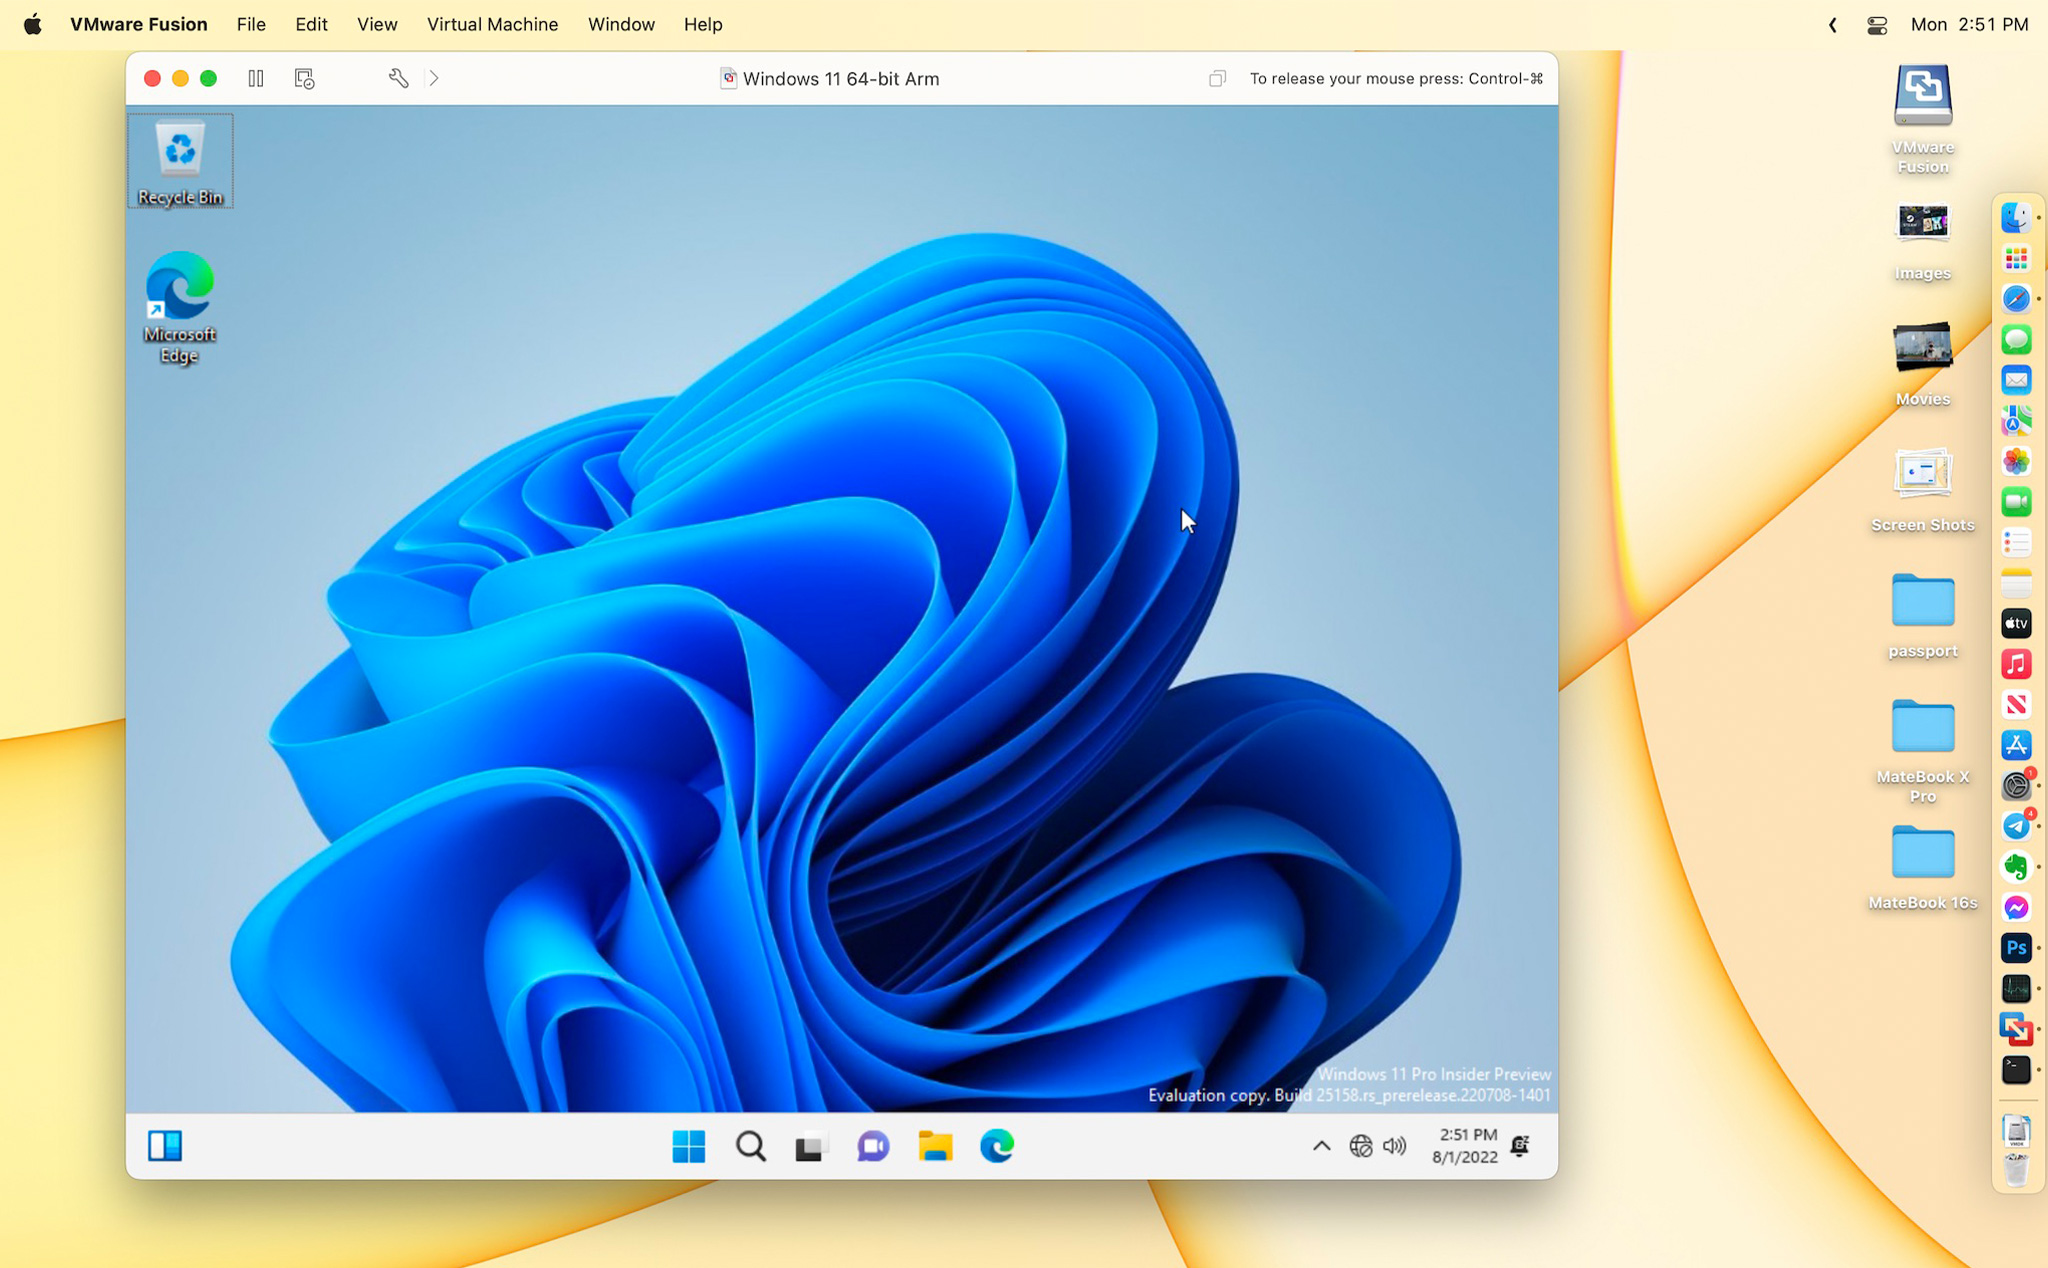 Hướng dẫn cài Windows 11 22H2 cho Mac Apple Silicon bằng VMWare Fusion Tech Preview